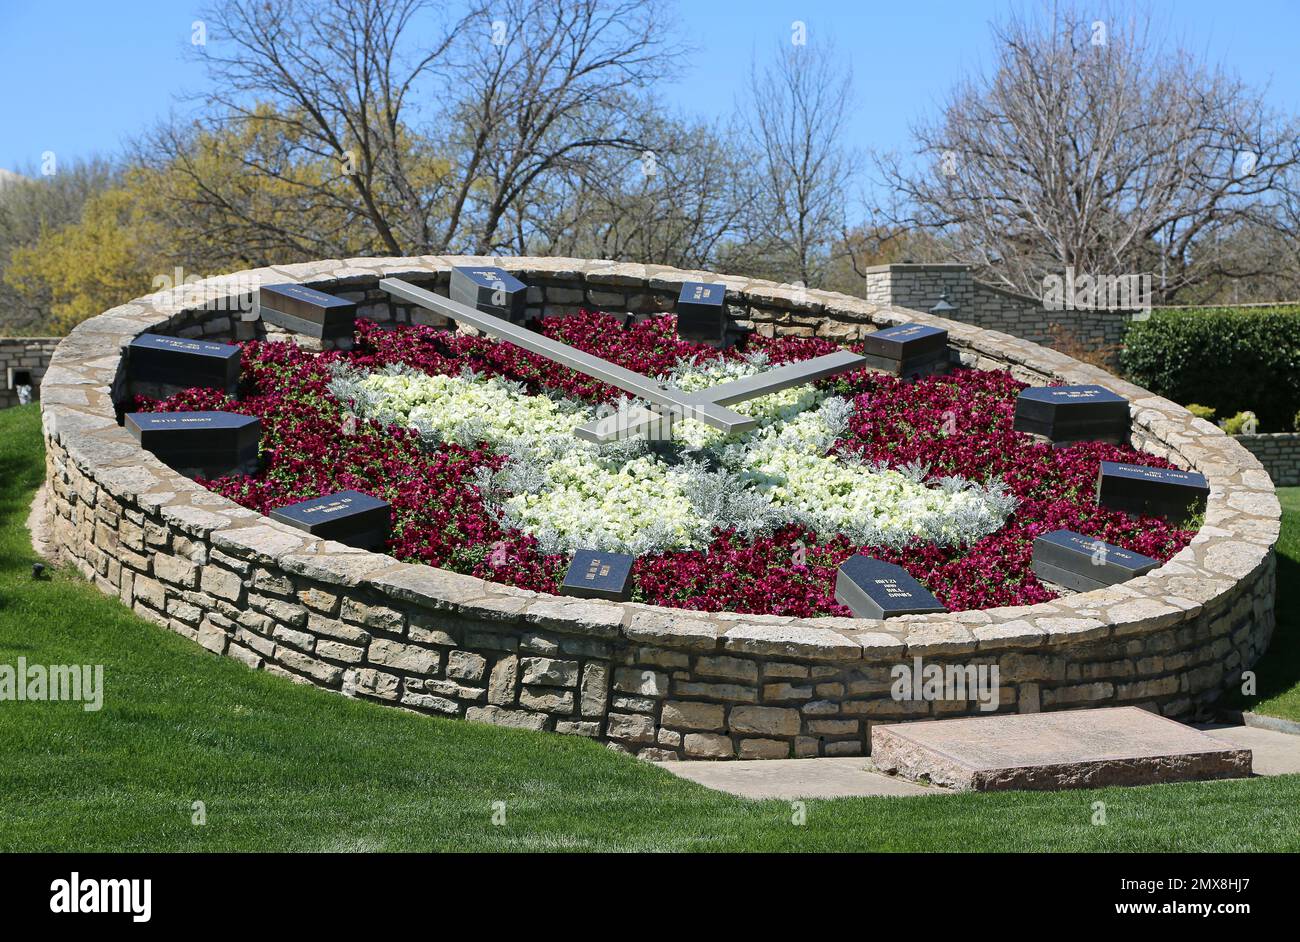 Floral clock - Fort Worth Botanic Garden, Texas Stock Photo